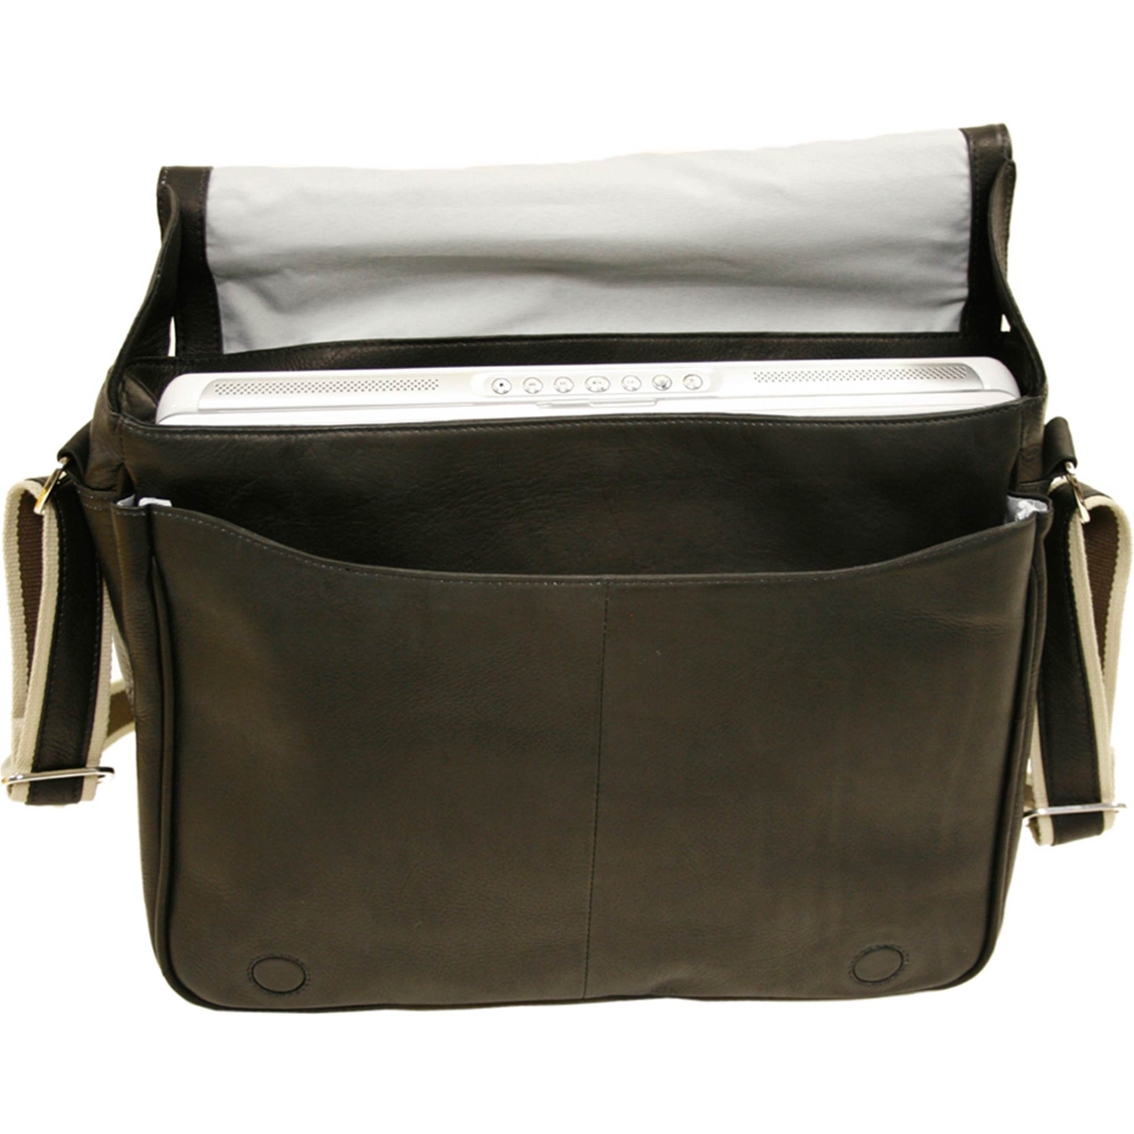 Piel Leather Expandable Messenger Bag - Image 3 of 3